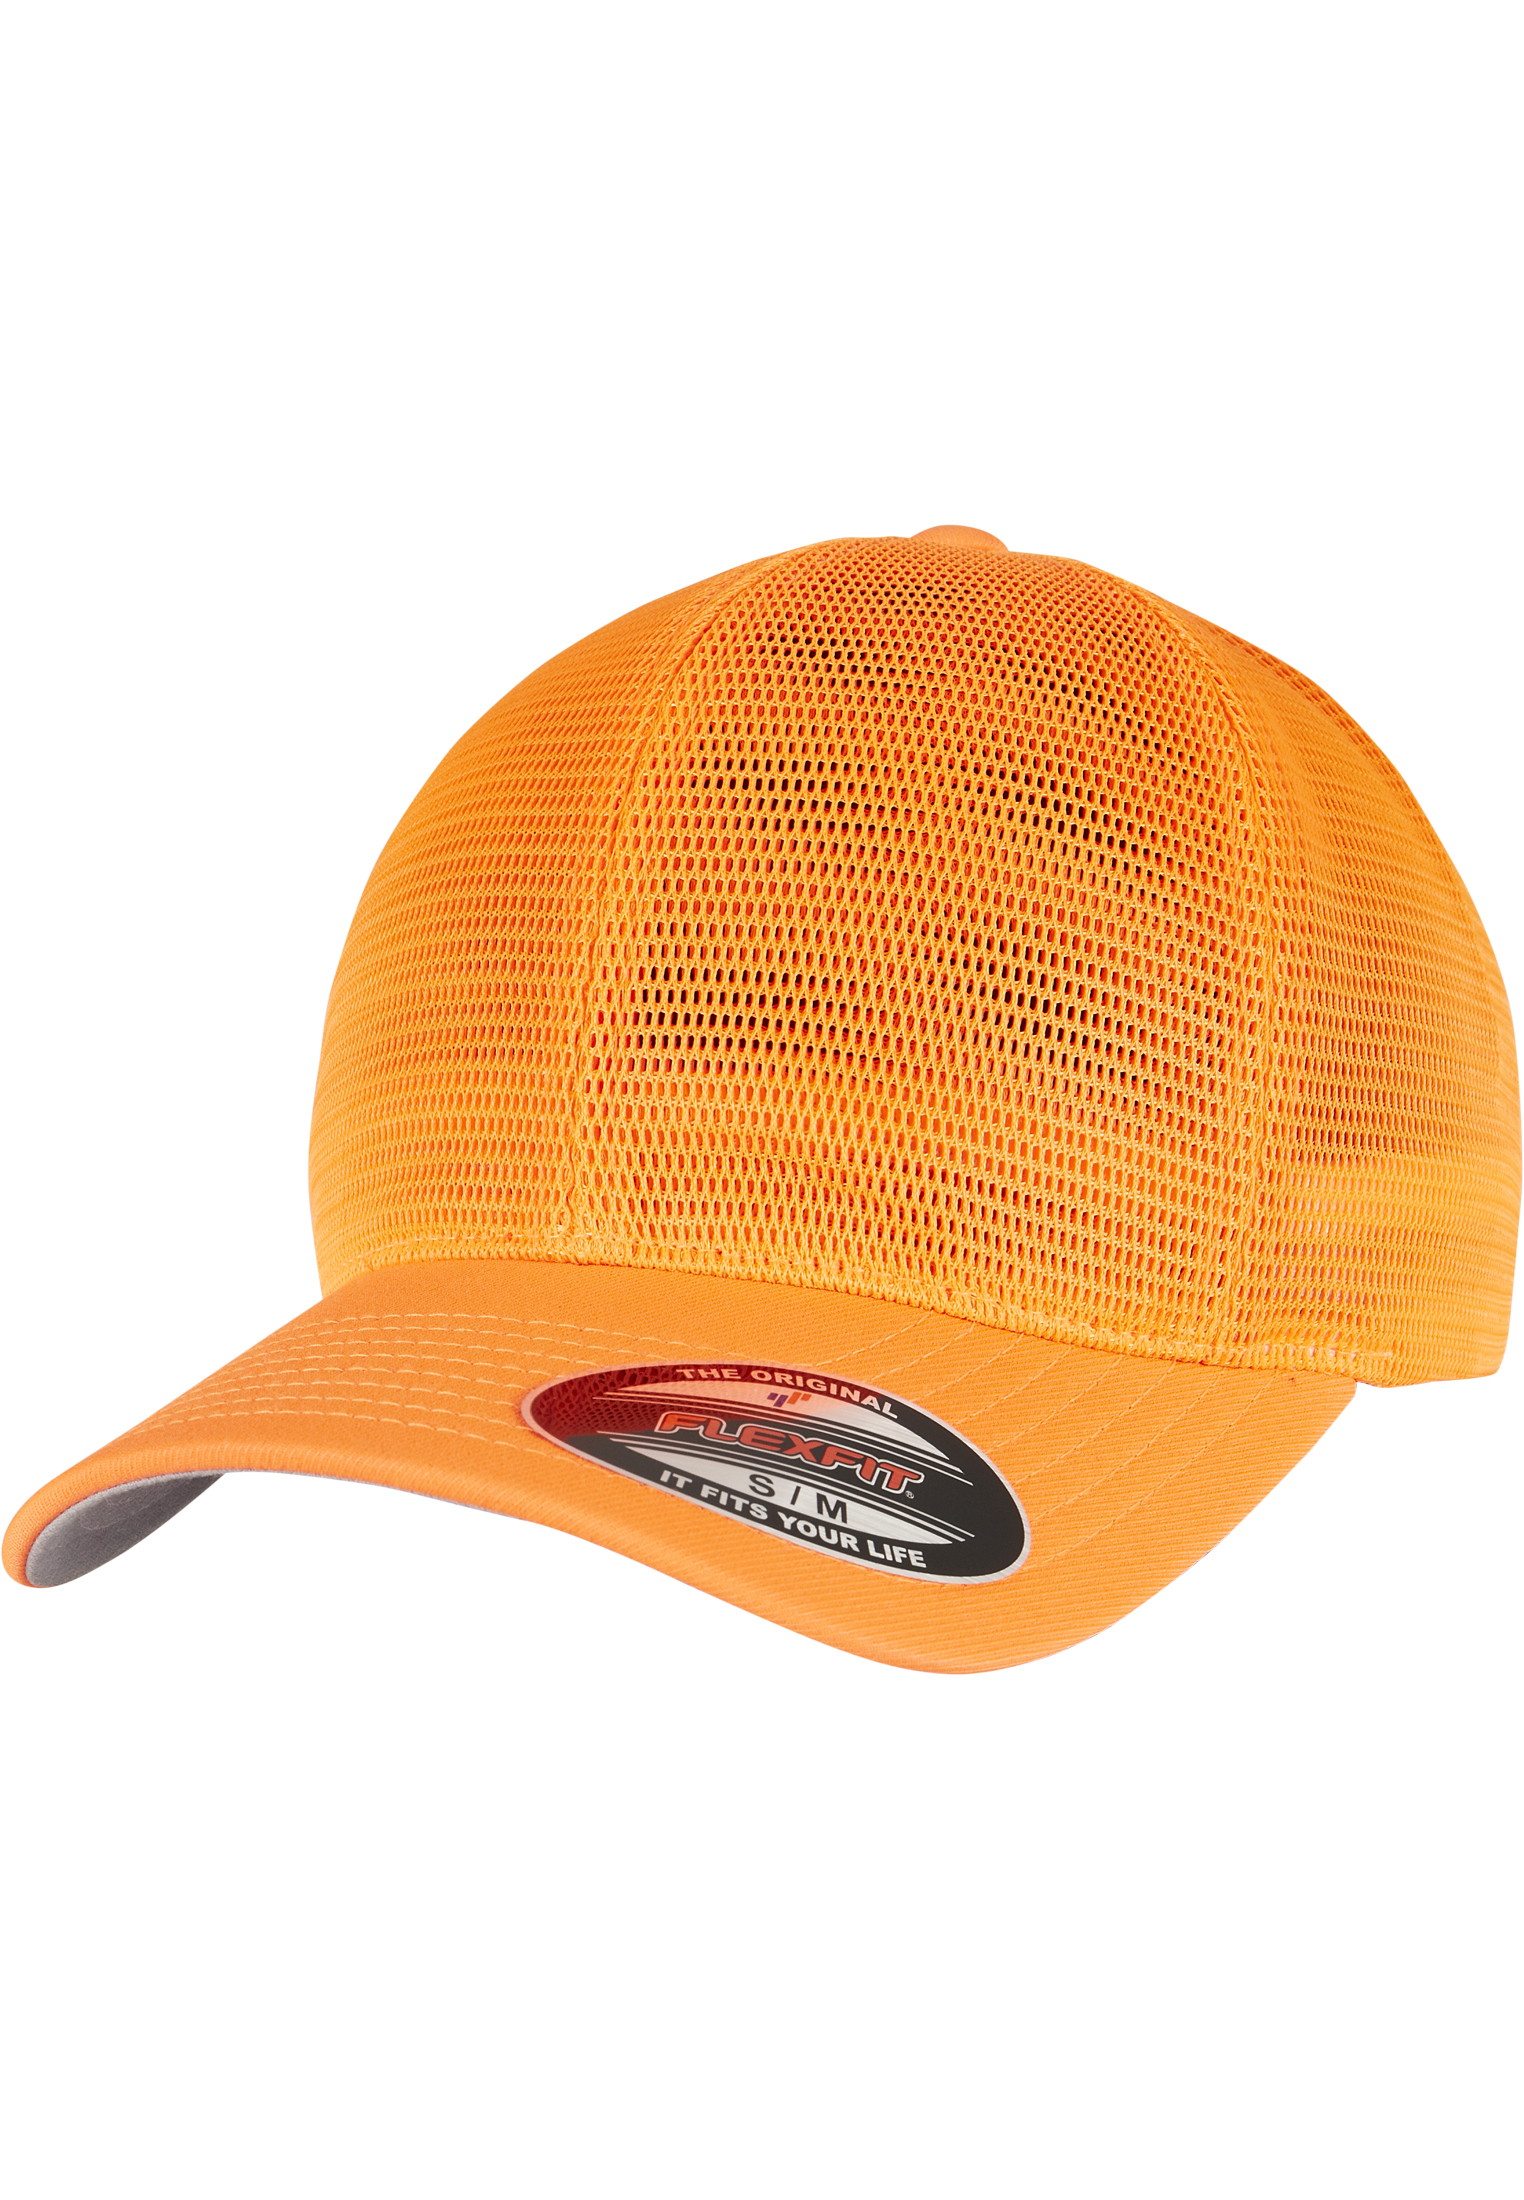 FLEXFIT 360 OMNIMESH Cap - Neon Orange